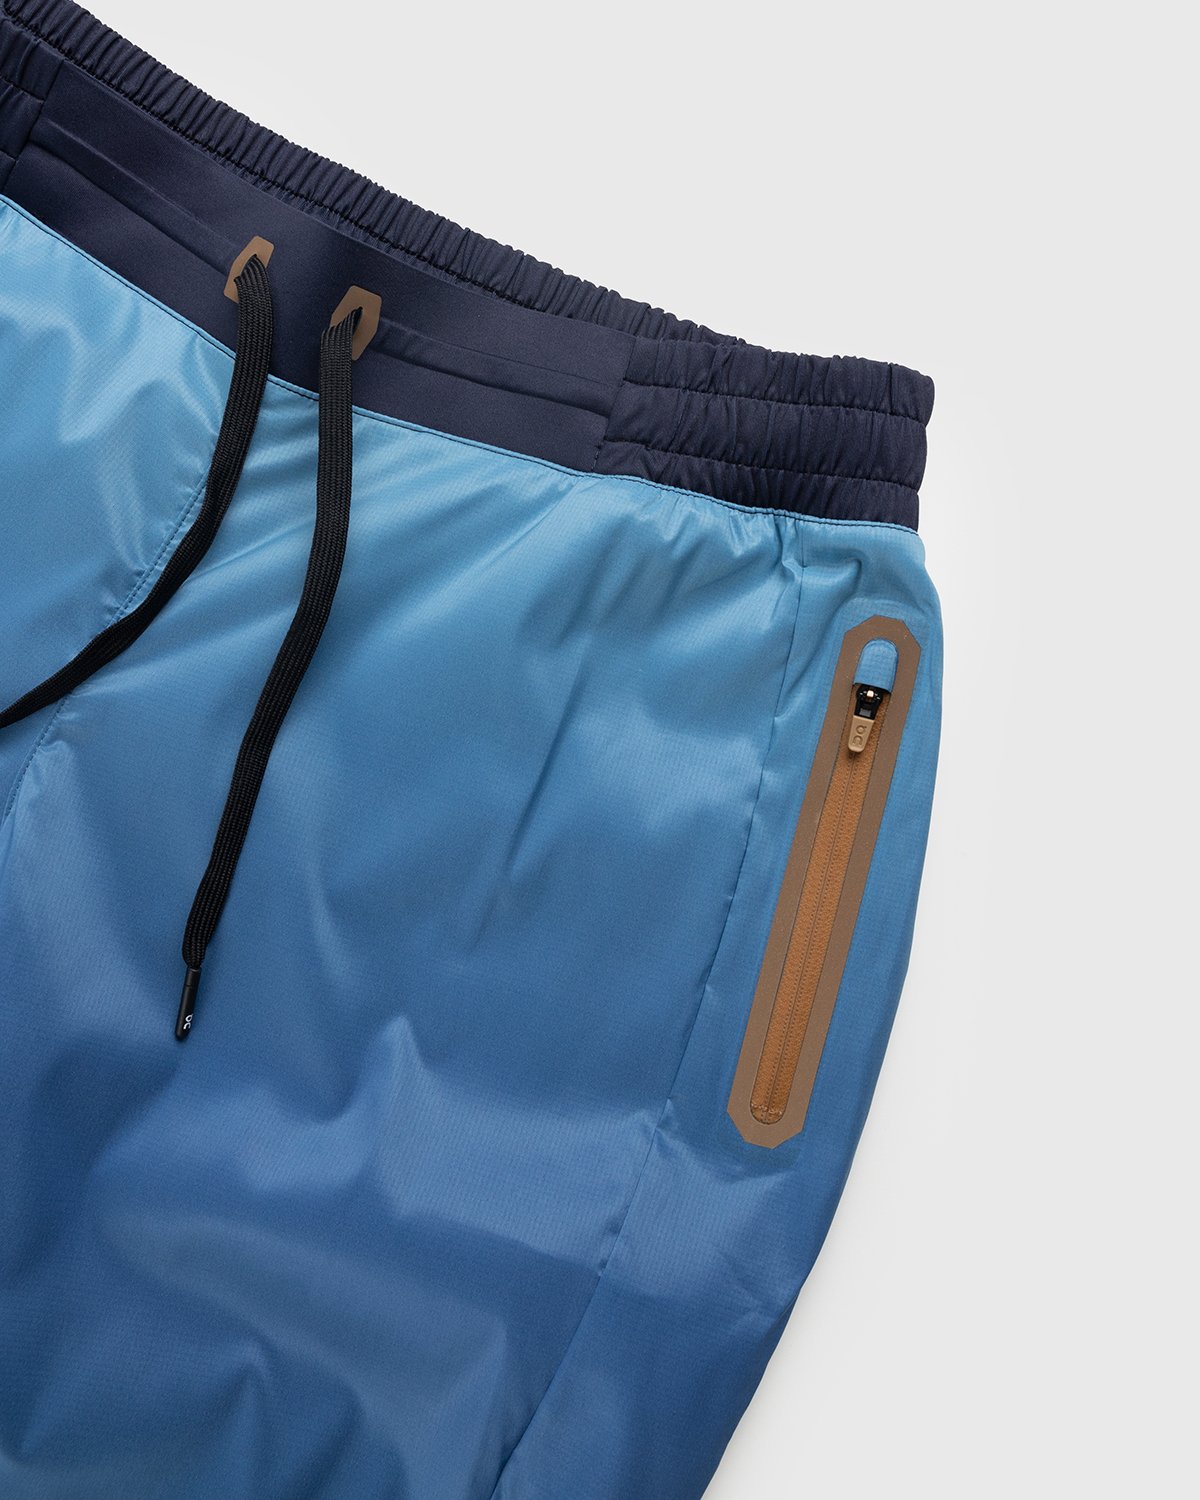 Loewe x On - Women's Technical Running Pants Gradient Blue - Clothing - Blue - Image 5